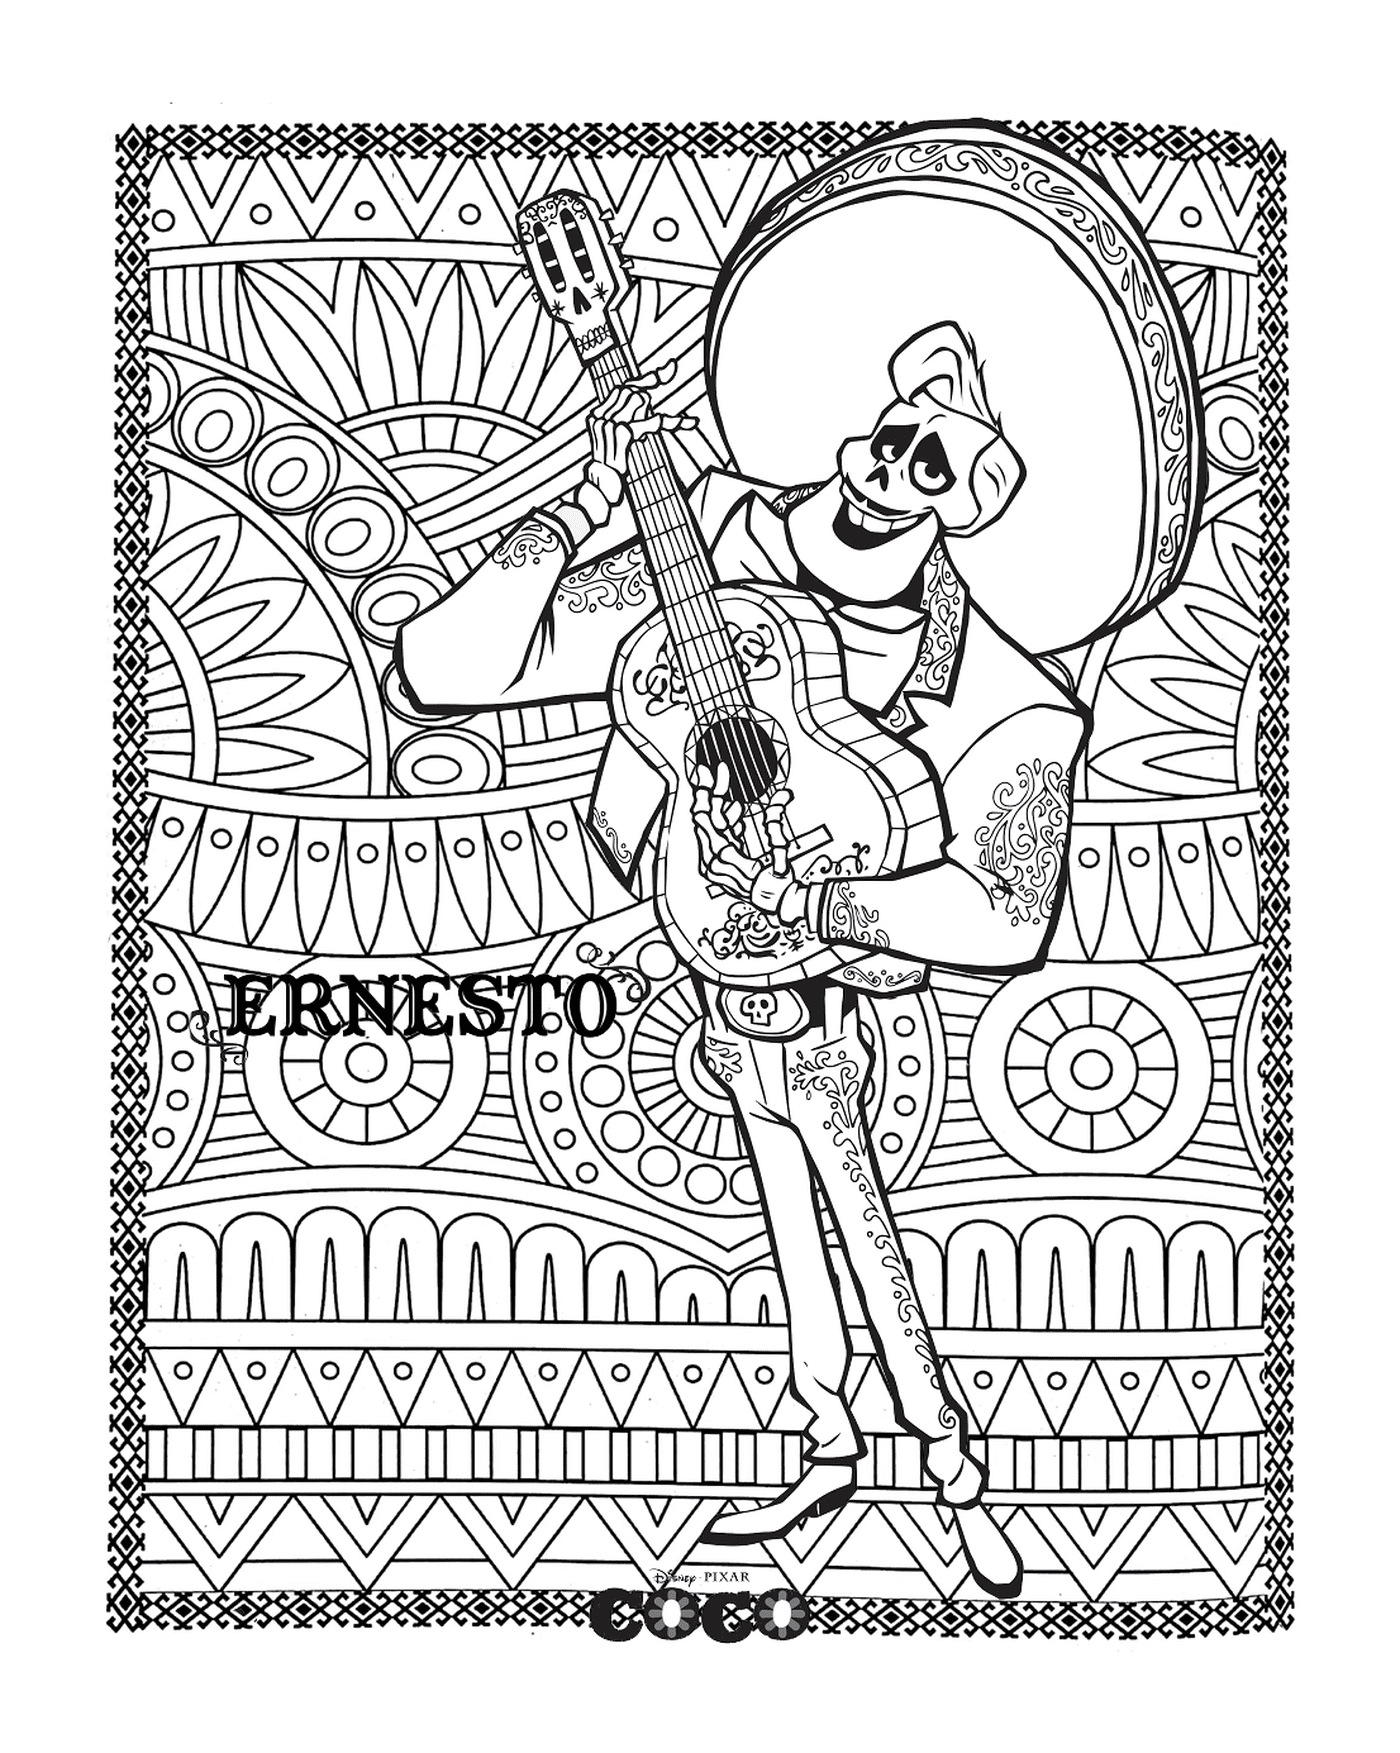  Ernesto, adult mandala background in Coco, Disney 